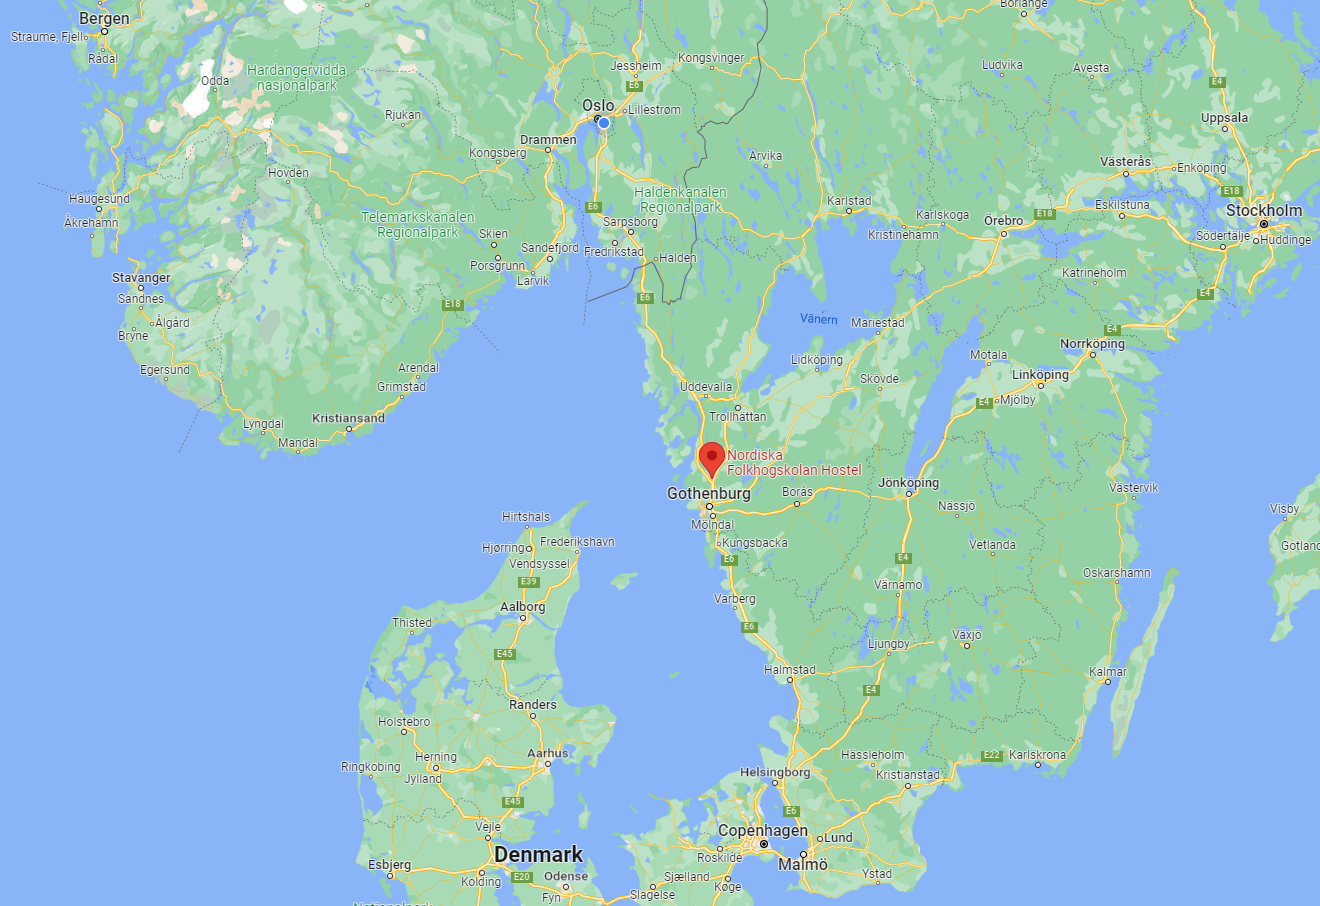 Kart der Nordiska folkhögskolan er markert